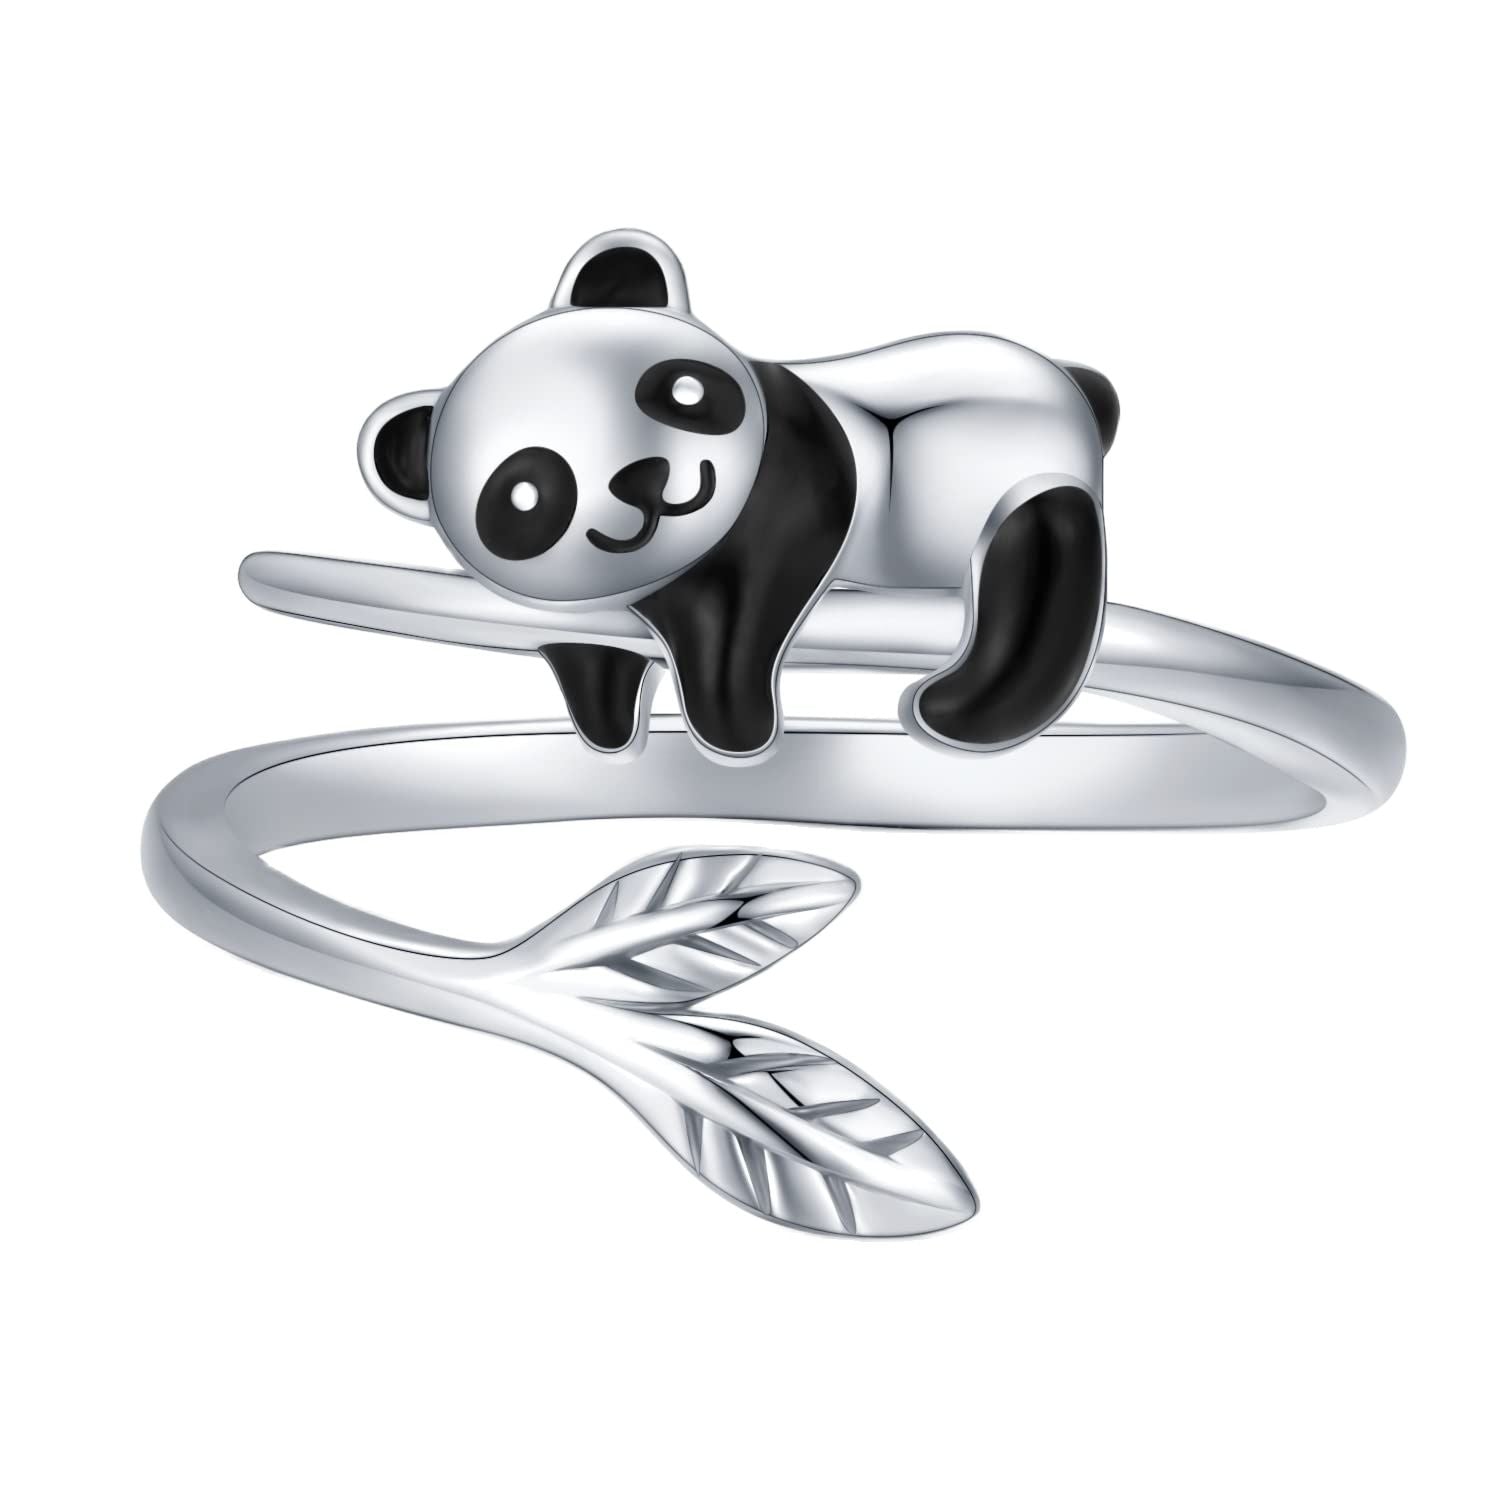 Cute Panda Bamboo Ring - animalchanel